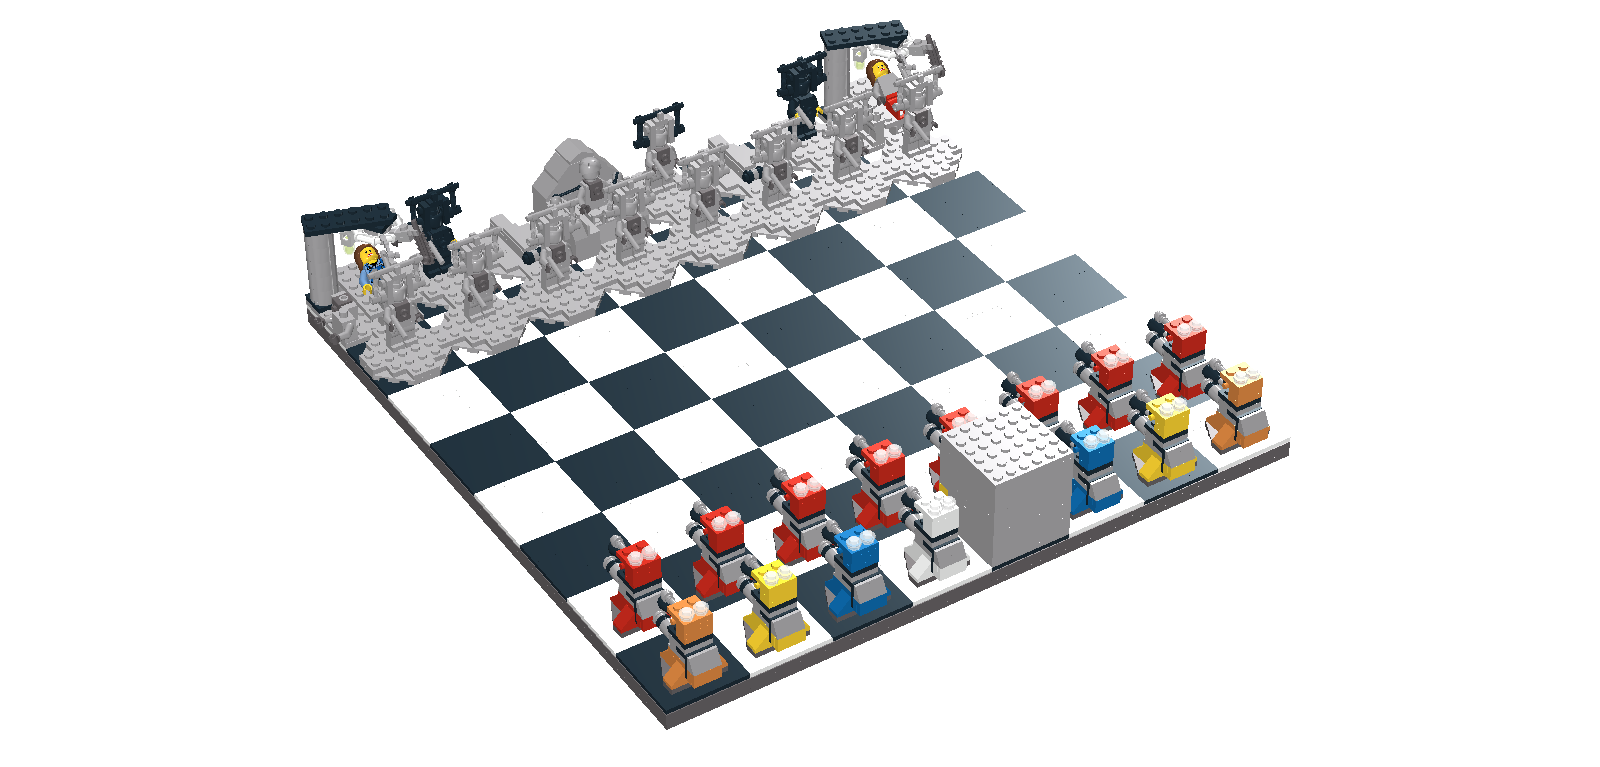 Chess-playing Cyberman, Tardis